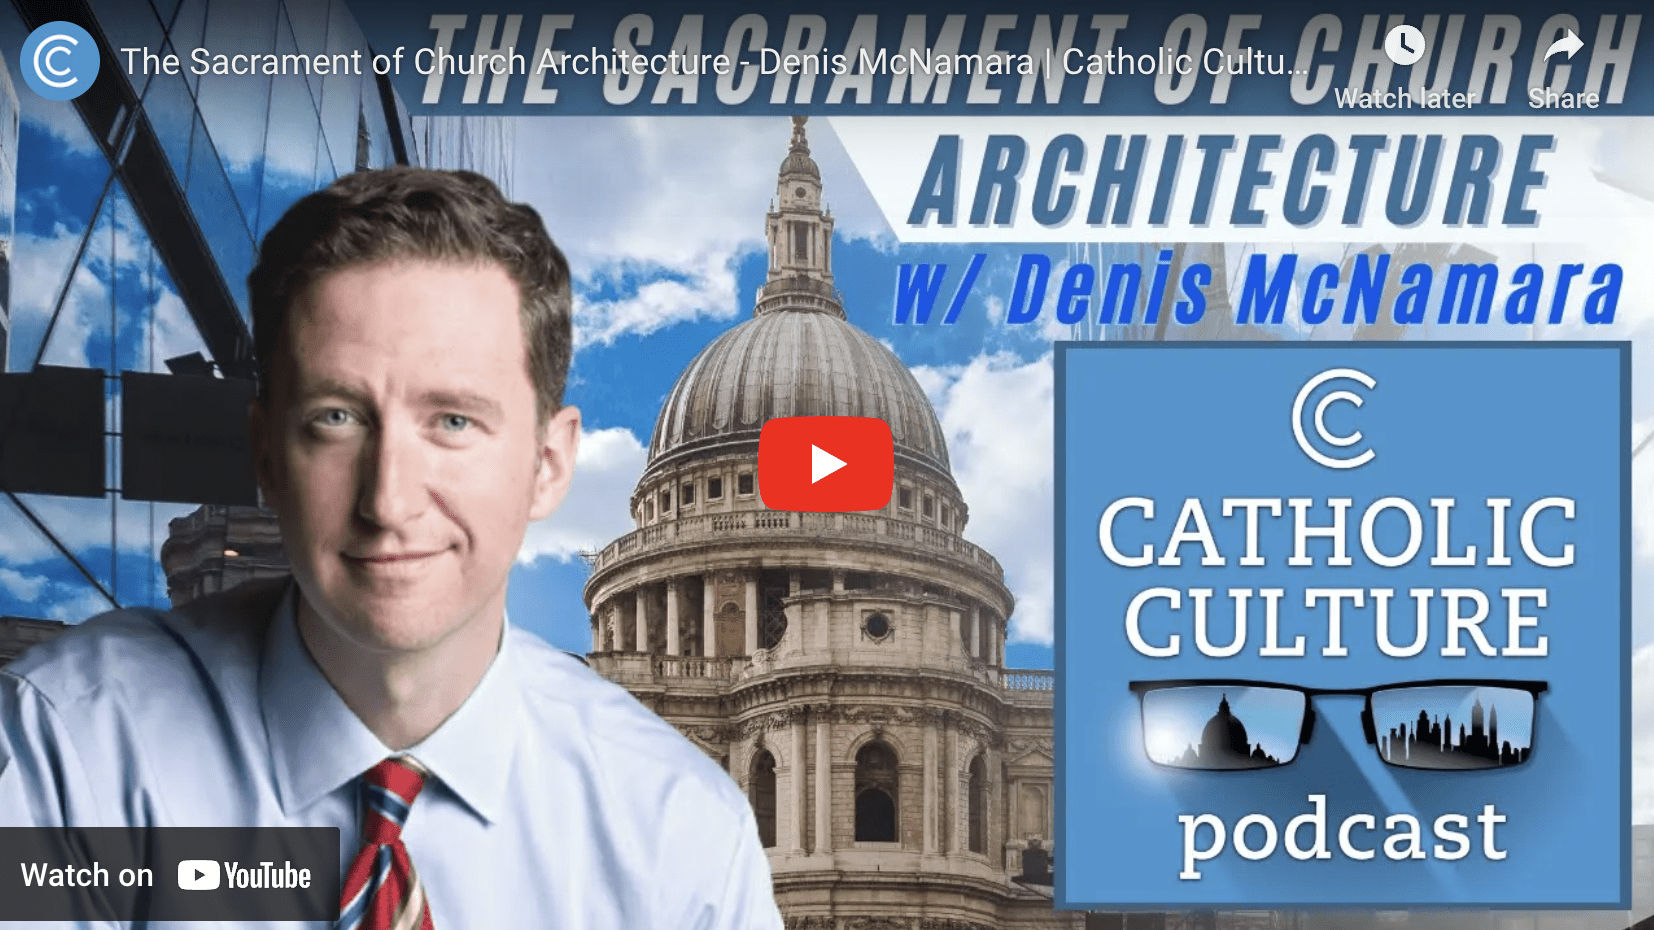 Podcast from – The Sacrament of Church Architecture—Denis McNamara